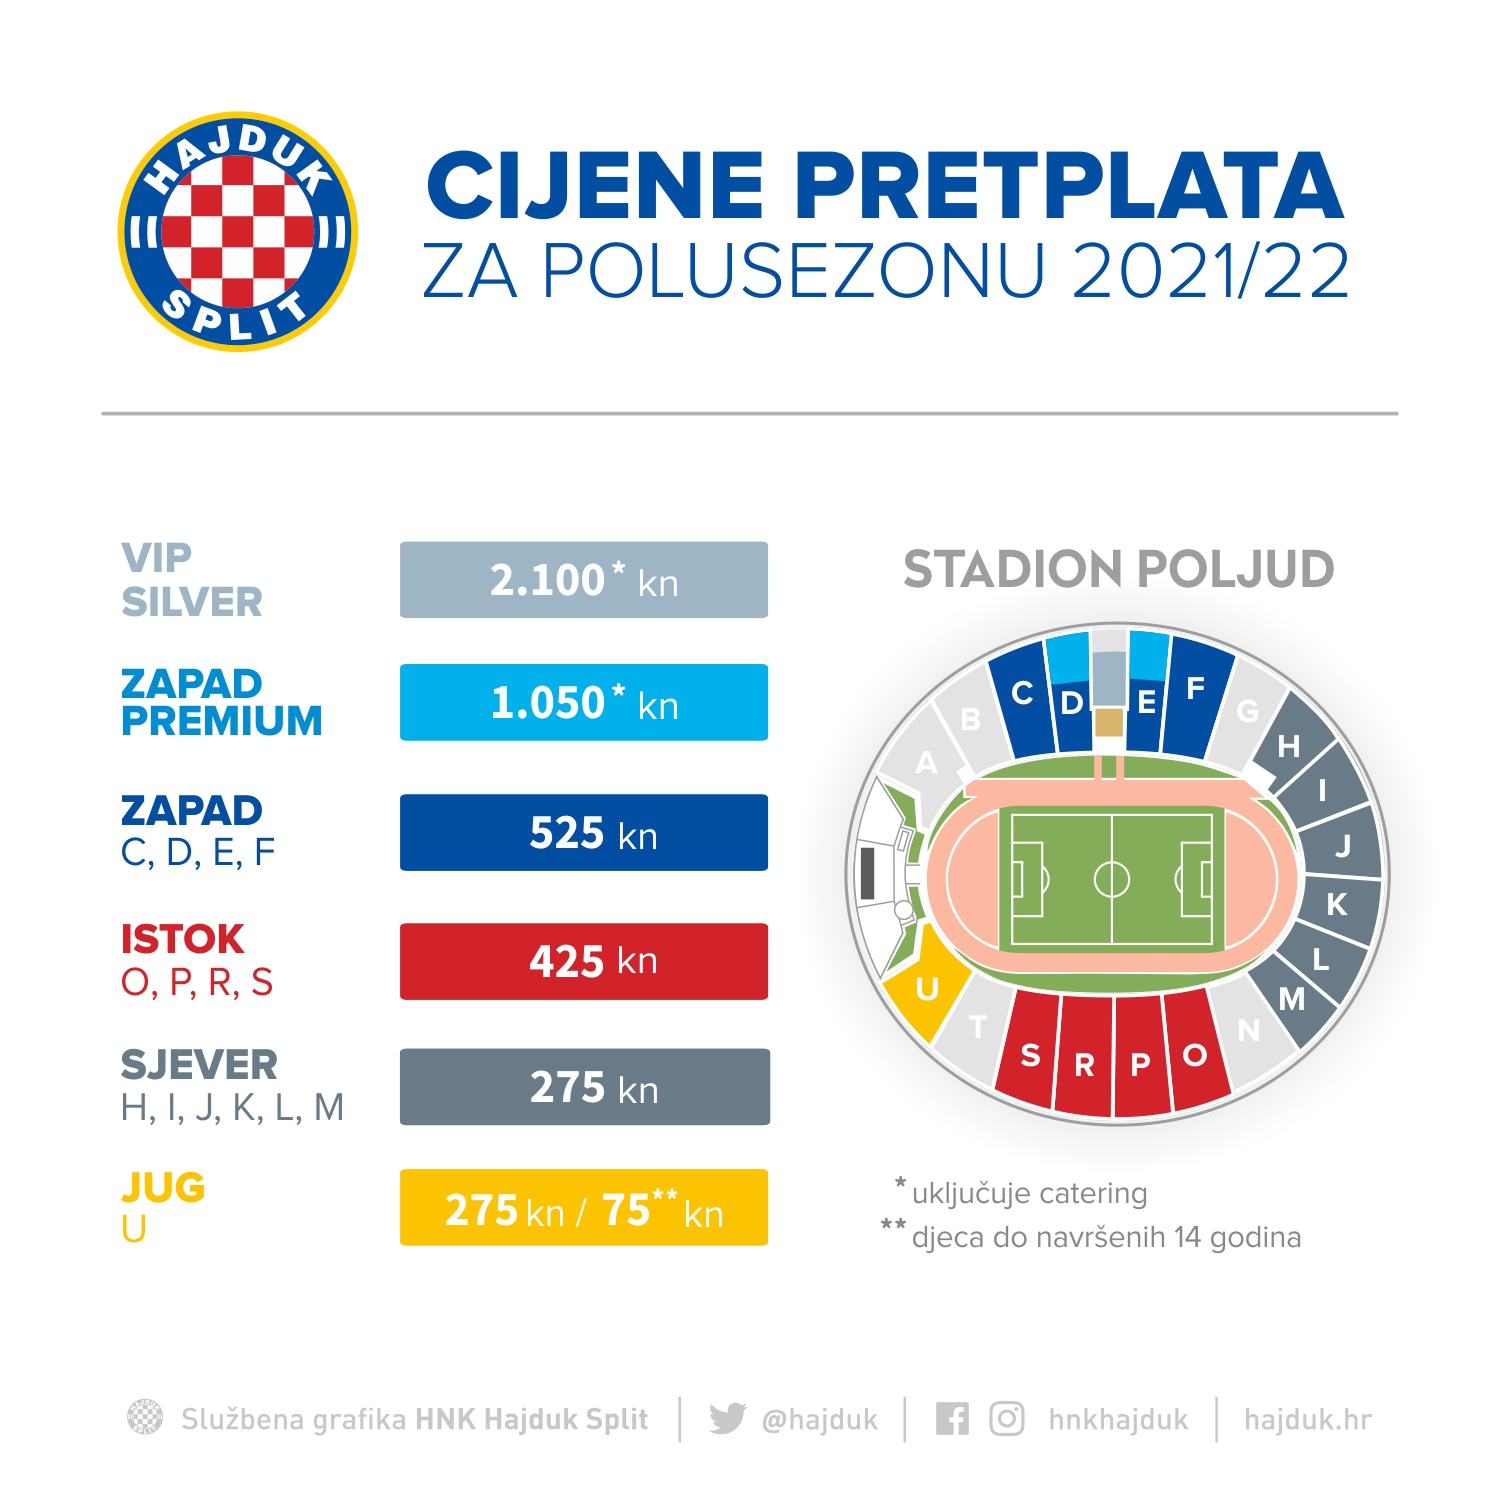 Hajduk pretplate